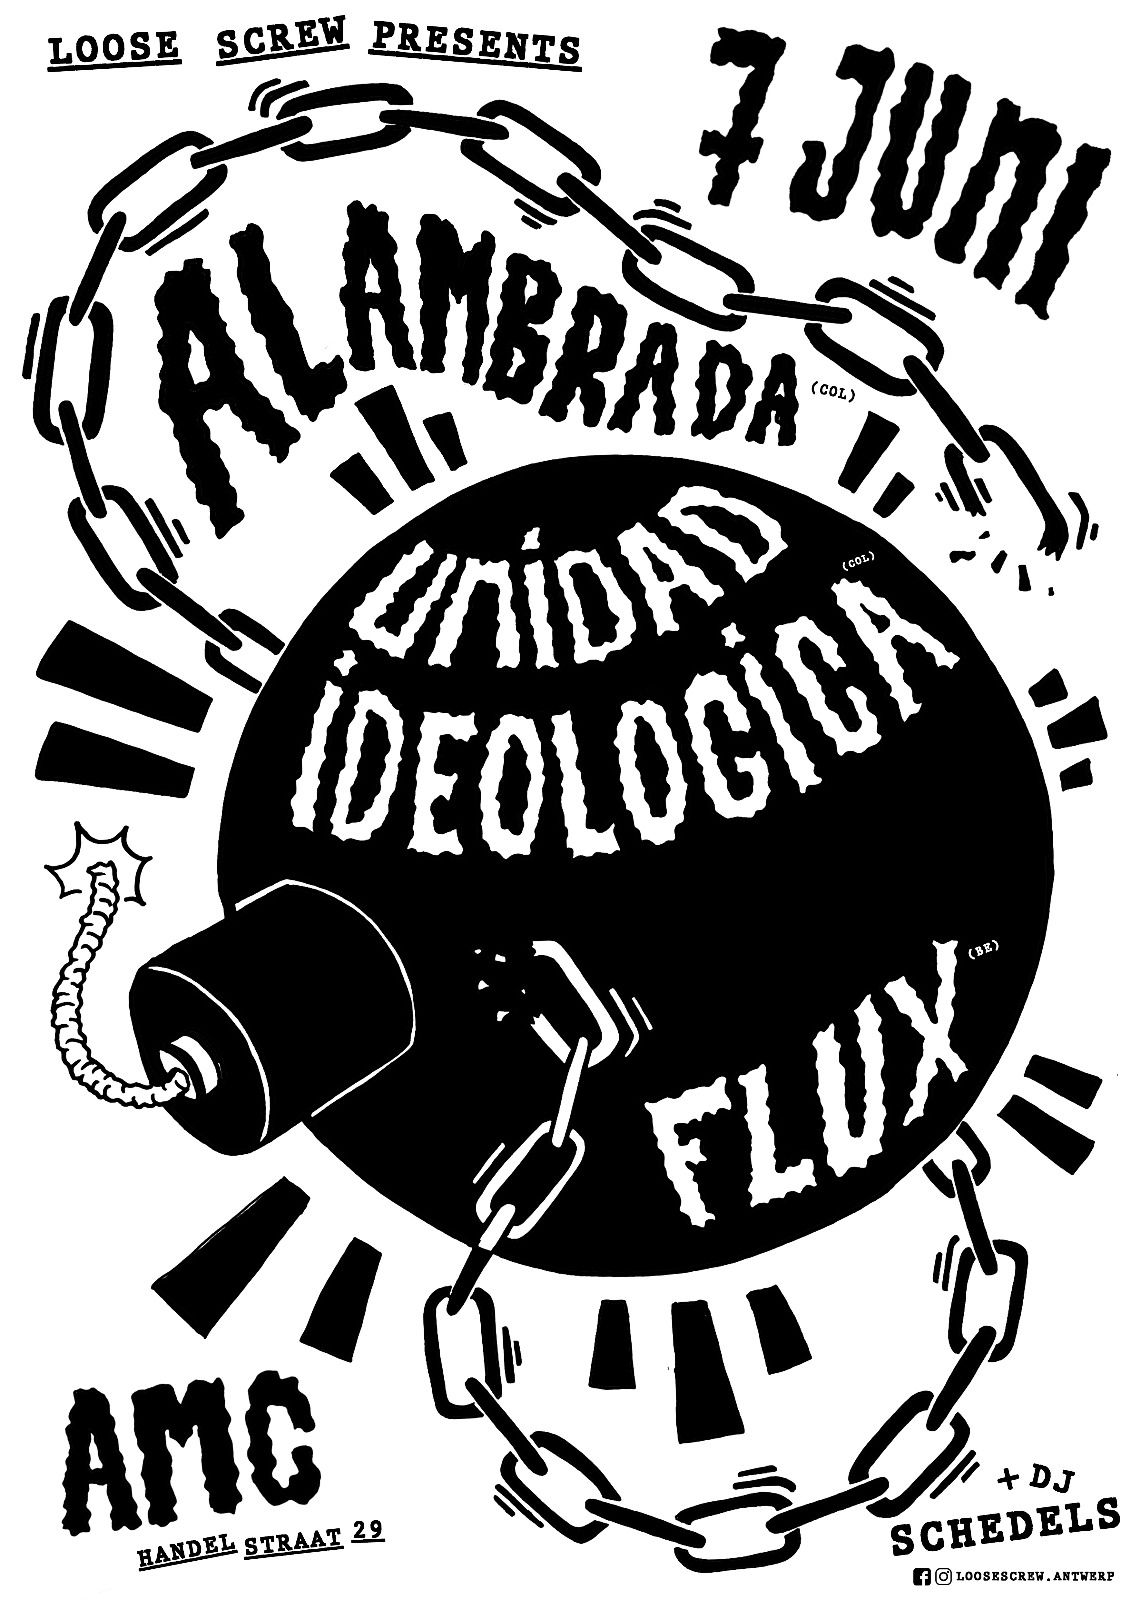 Alambrada (col) + Unidad Ideologica (col) + Flux